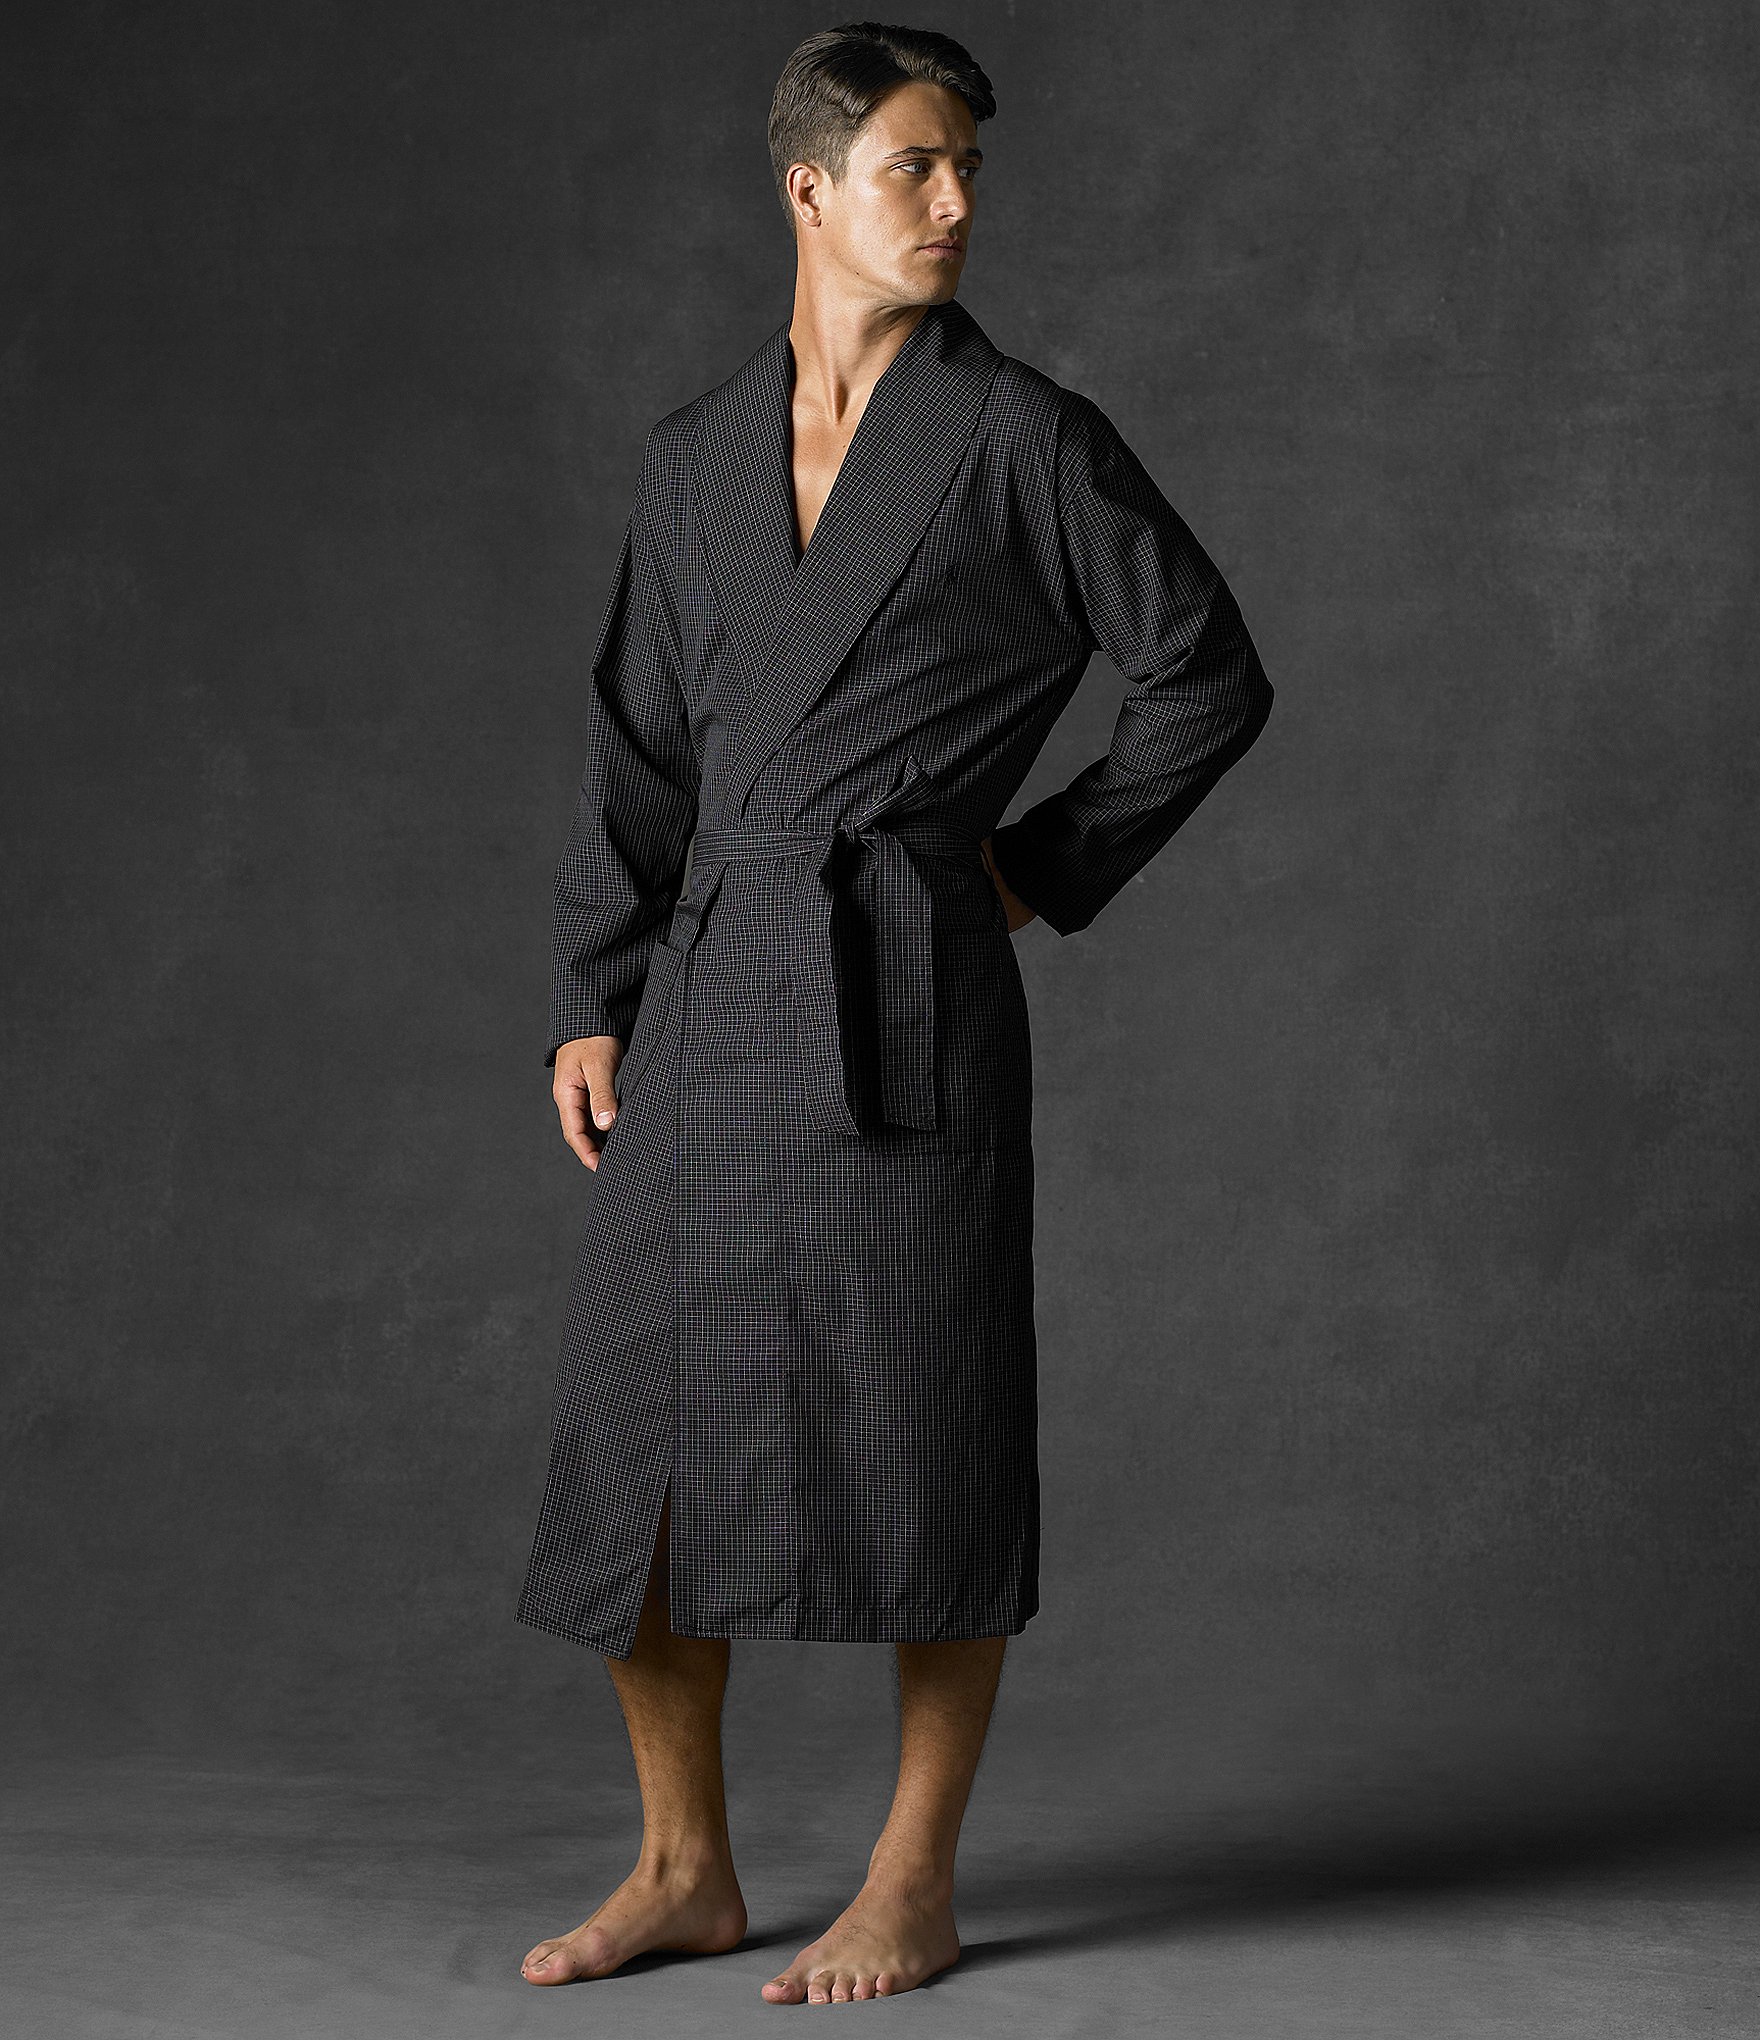 ralph lauren cotton robe